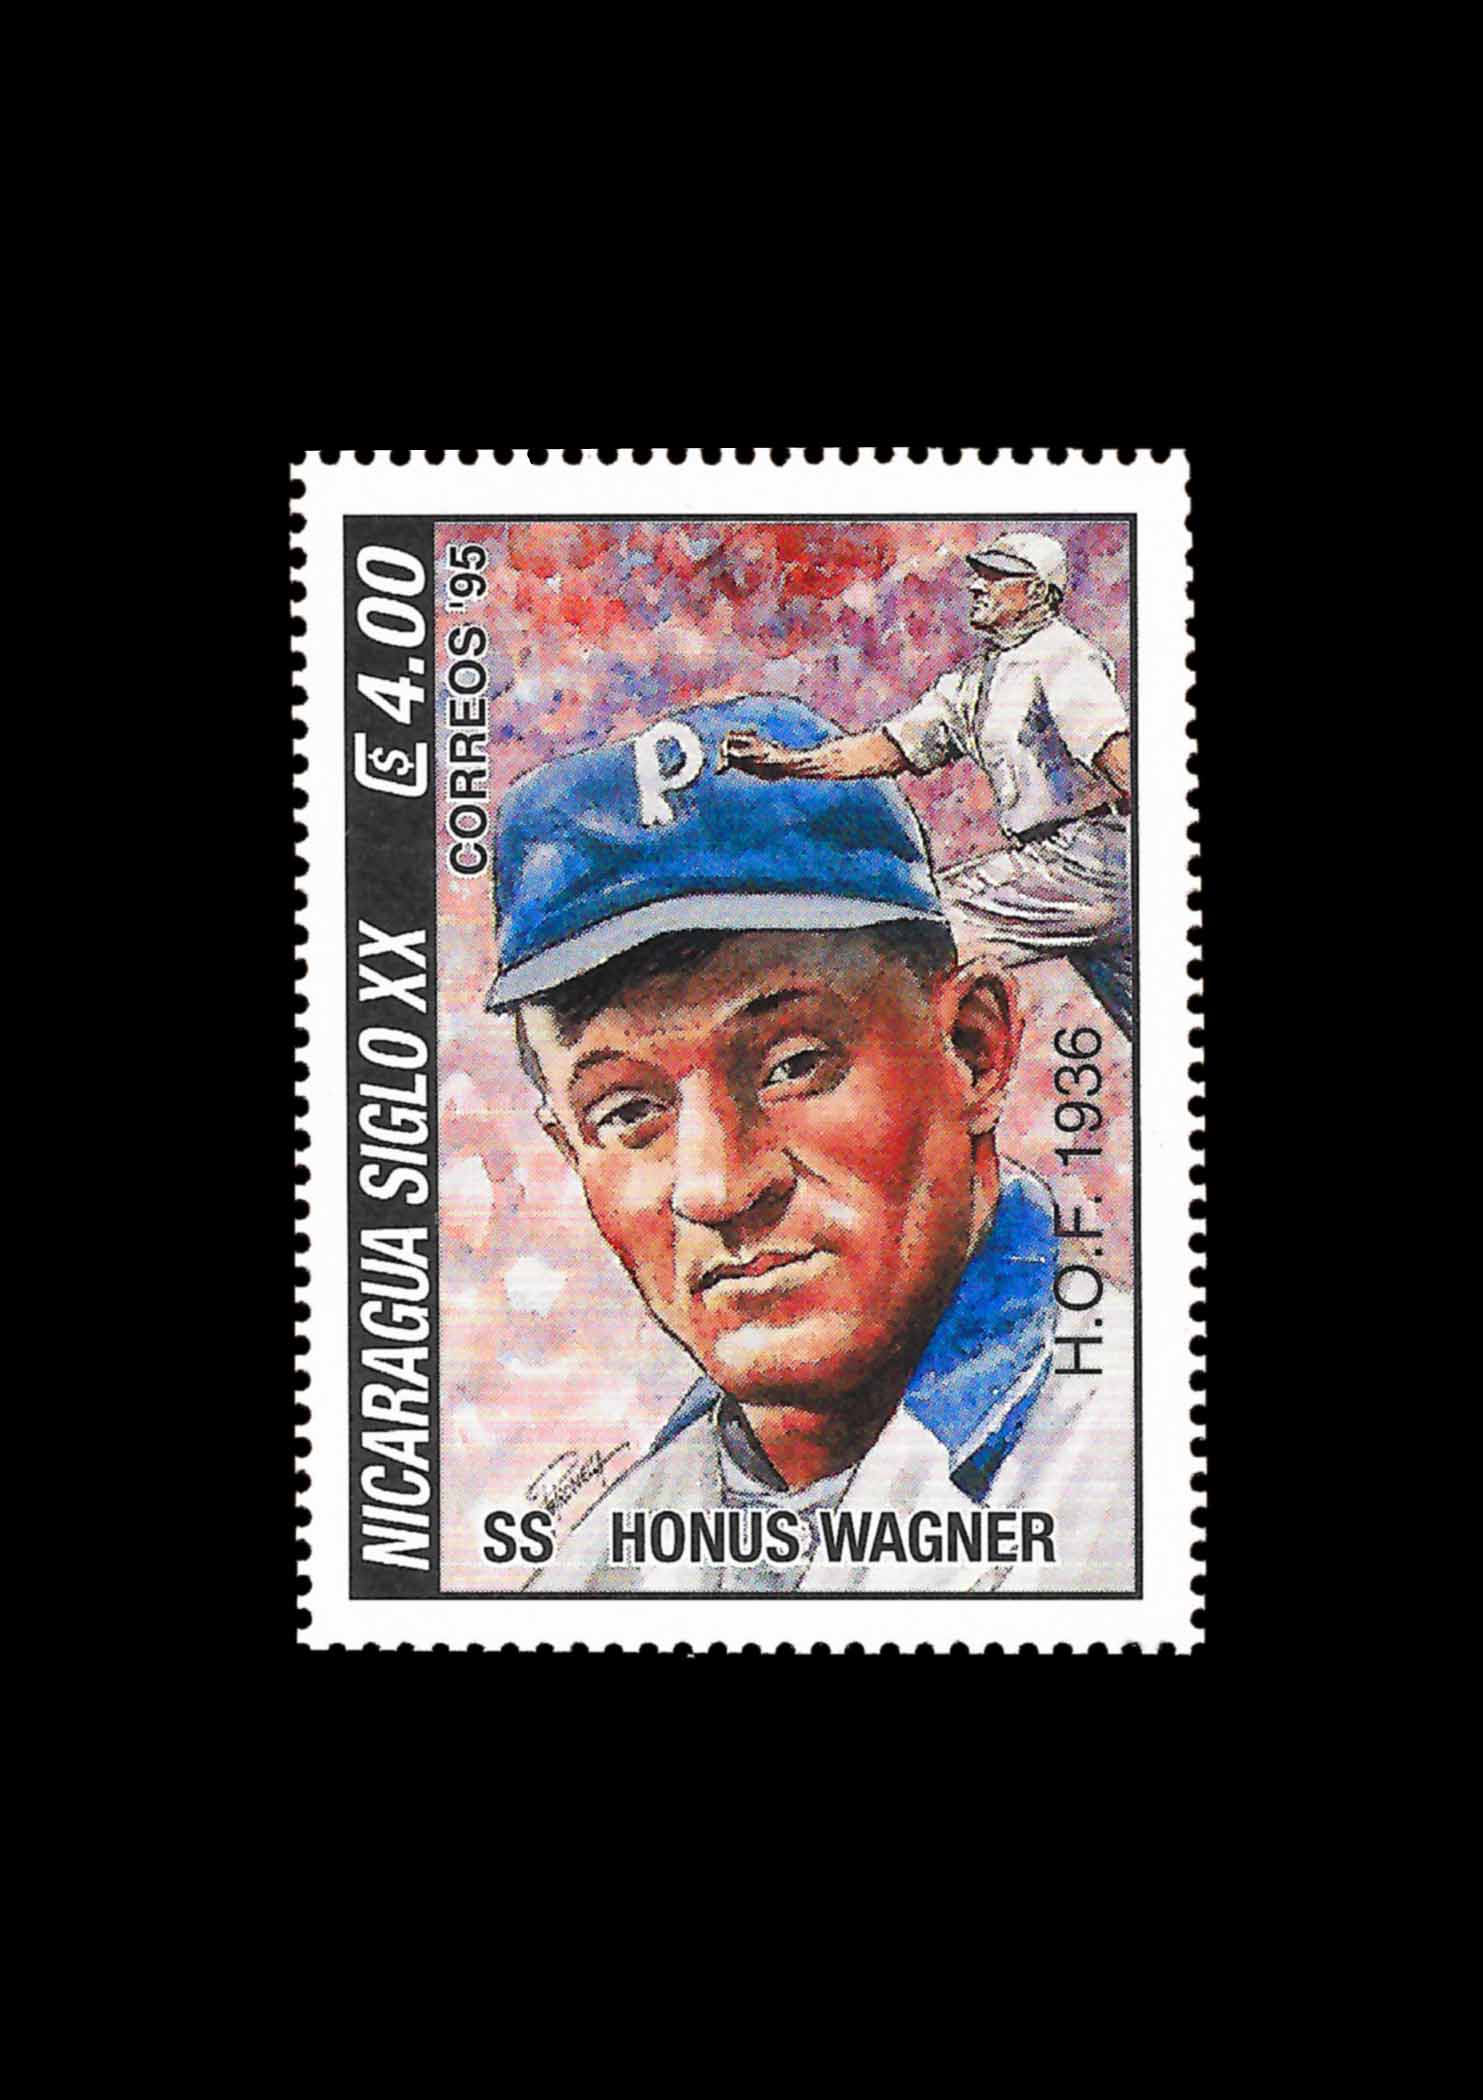 1996 Nicaragua Postage Stamps Baseballs Hall of Fame Dream Team